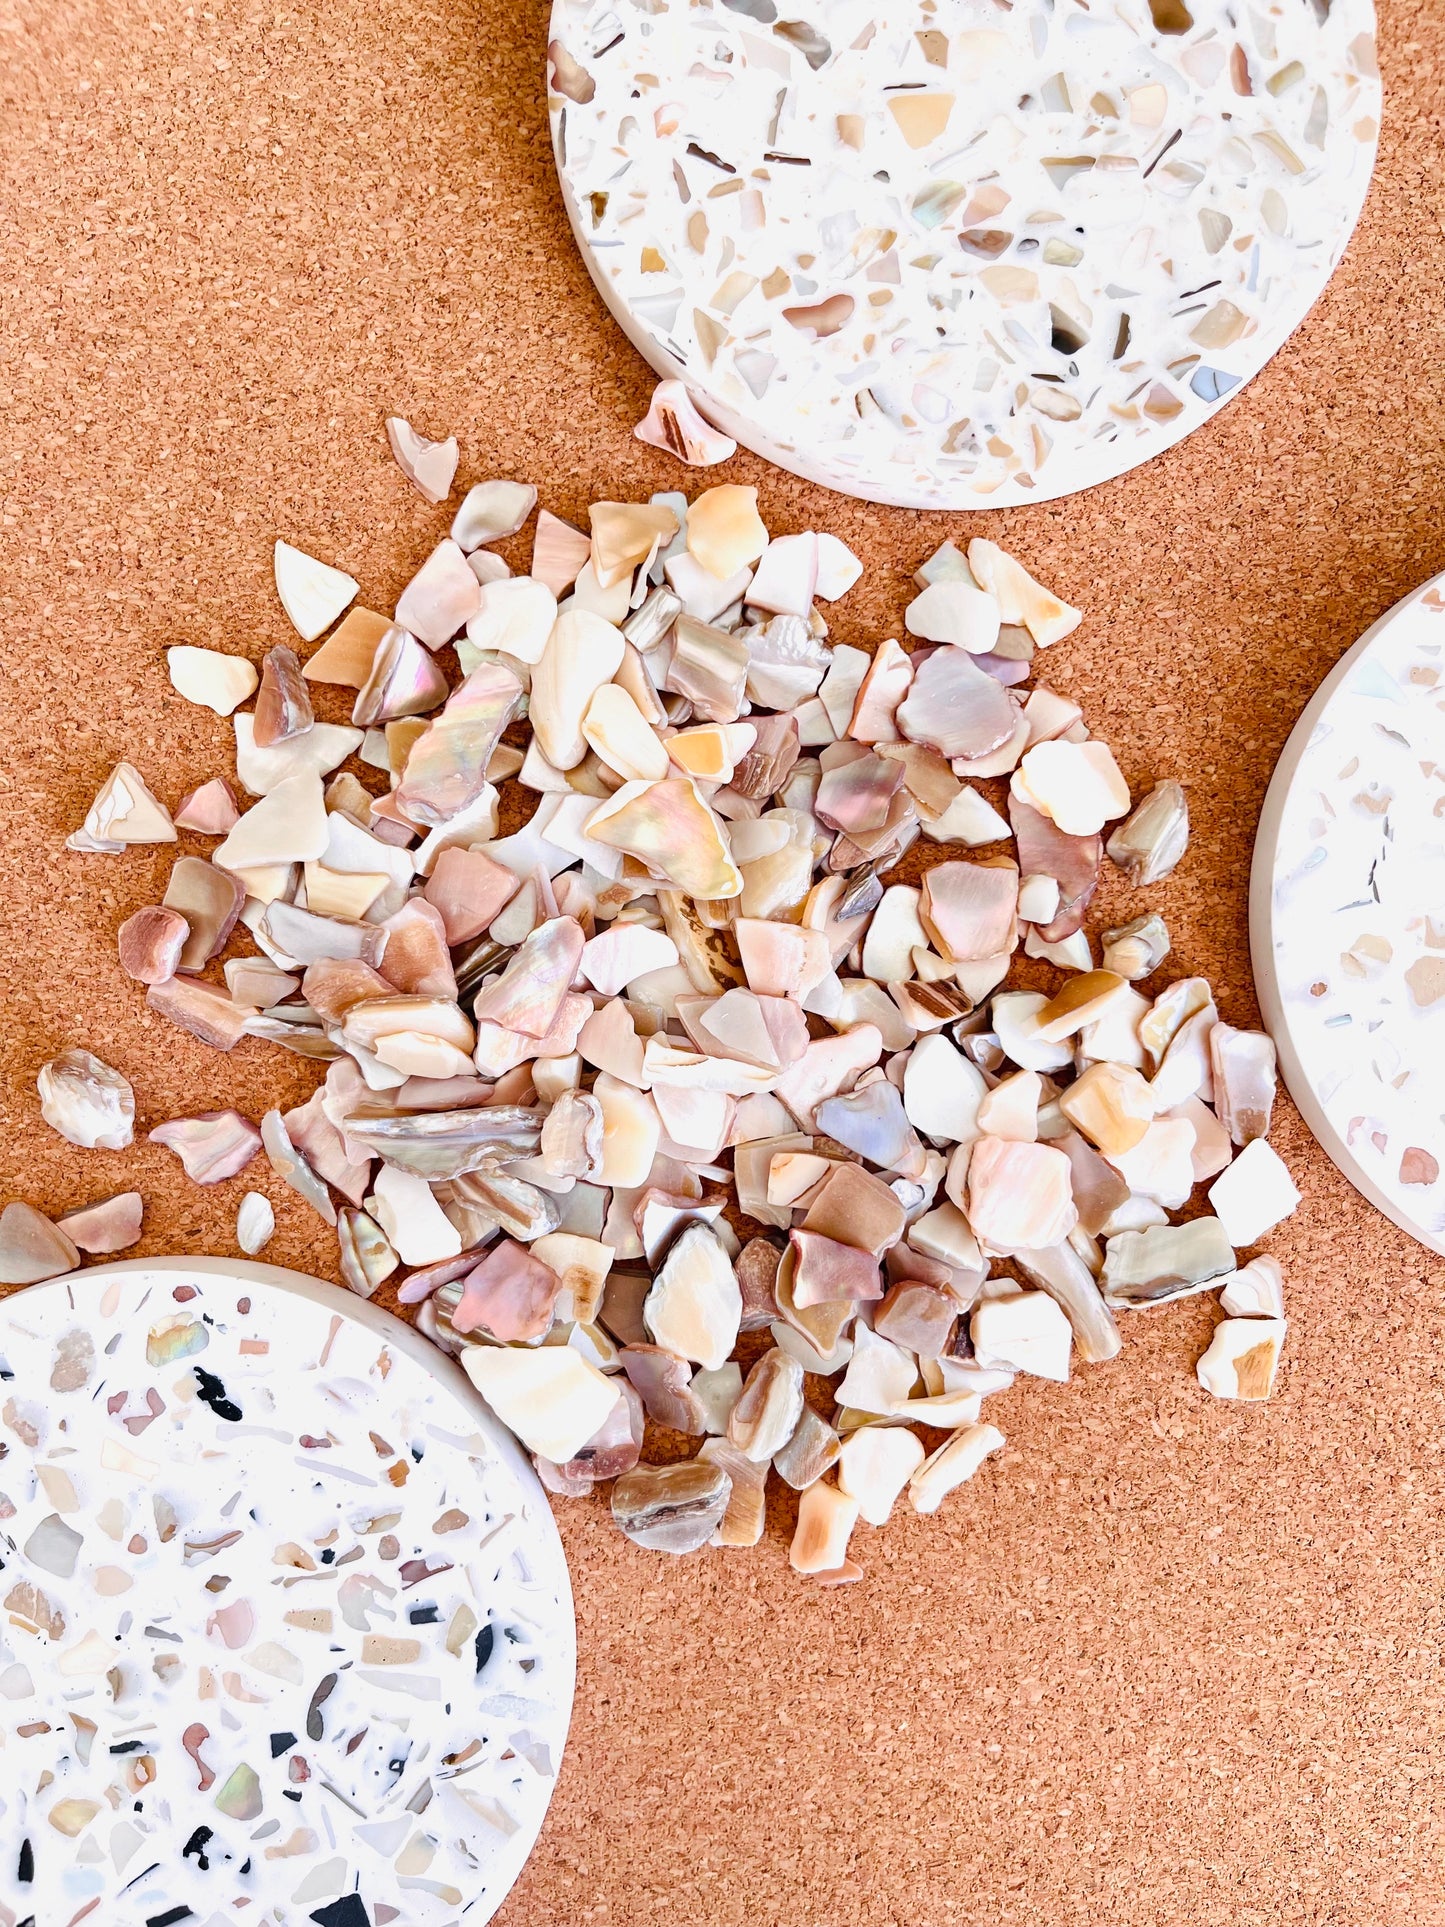 Crushed Seashells (100g)